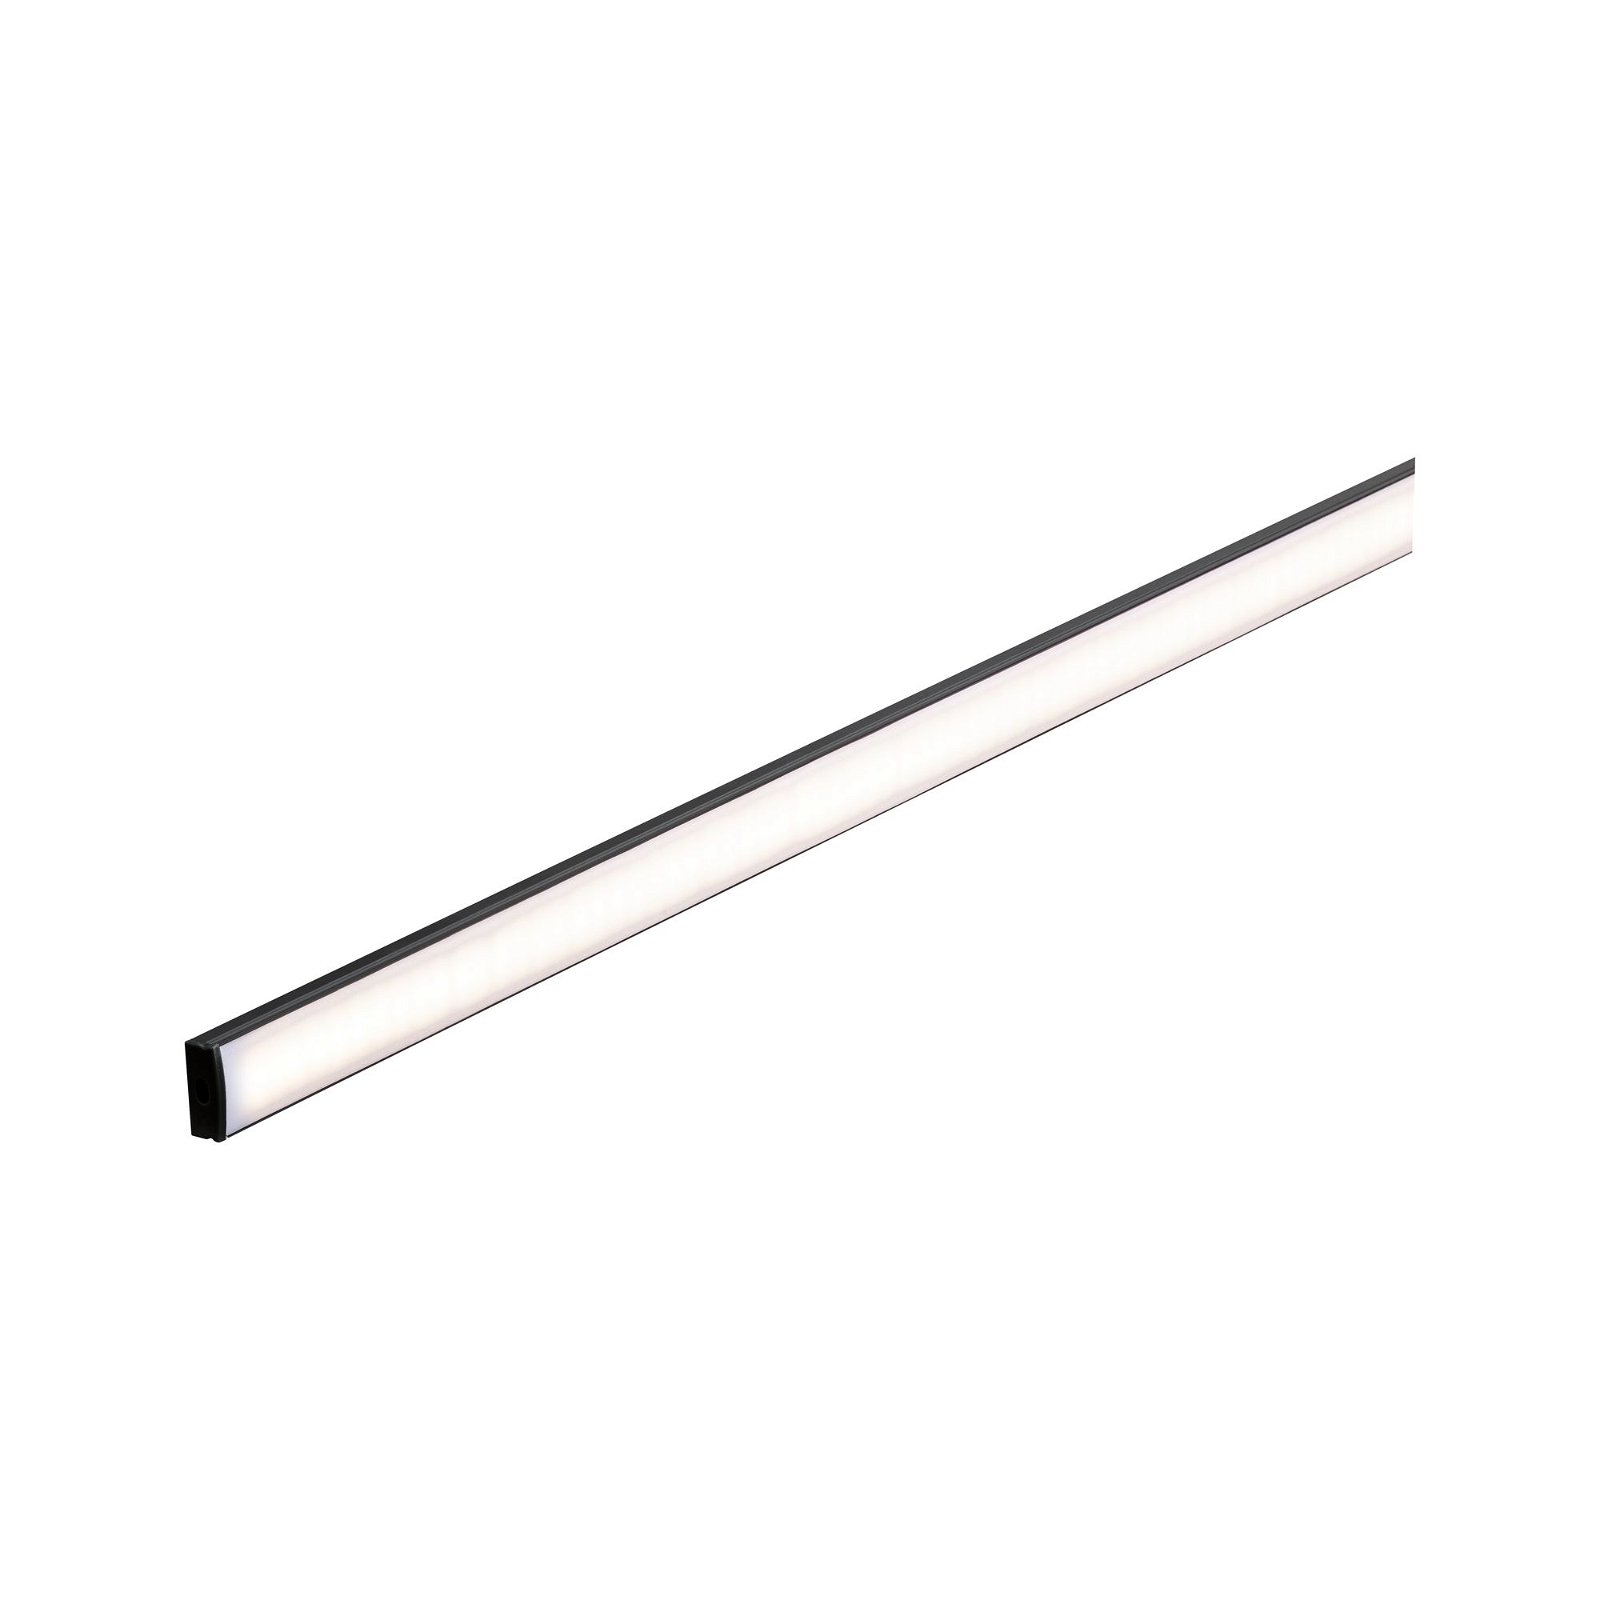 LED Strip profile Base White diffuser 2m Black